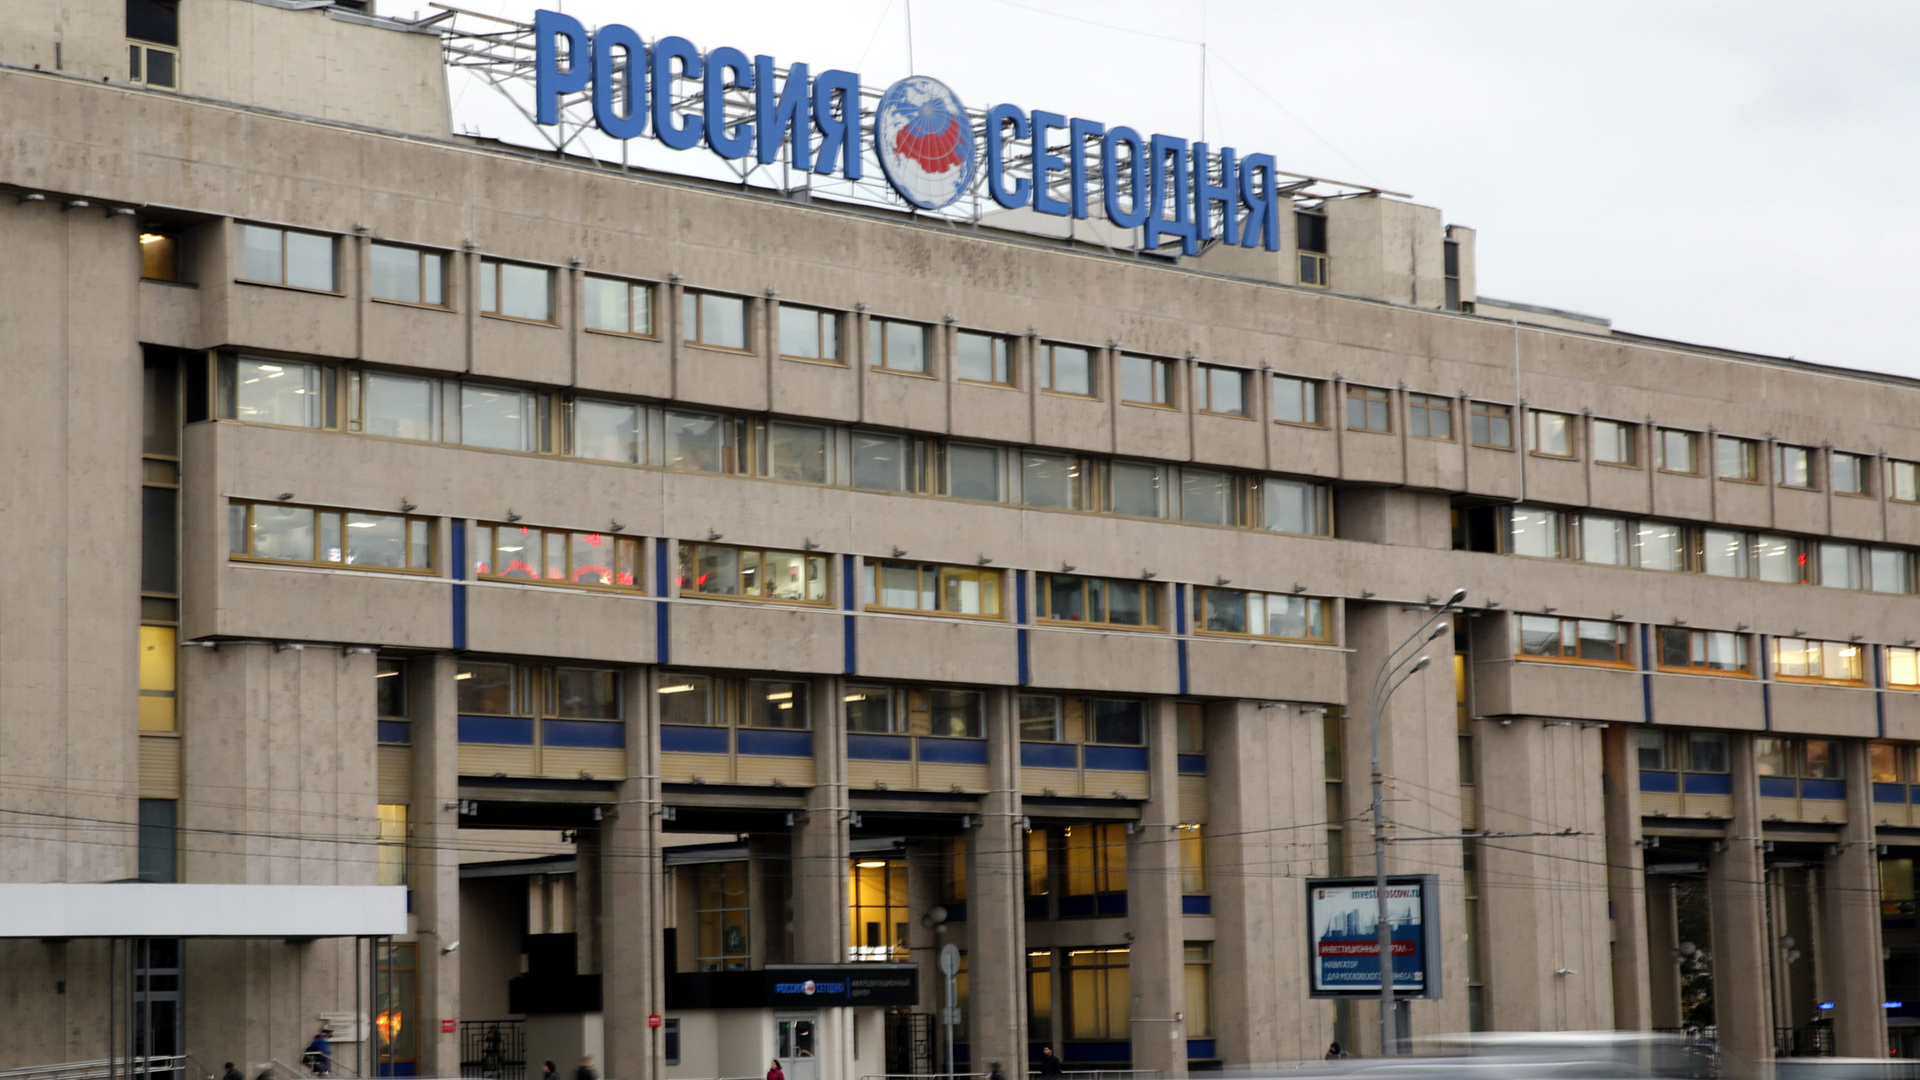 Hauptgebäude der Medienholding "Russia Sewodnja" am Smolensker Boulevard in Moskau. | picture alliance / dpa